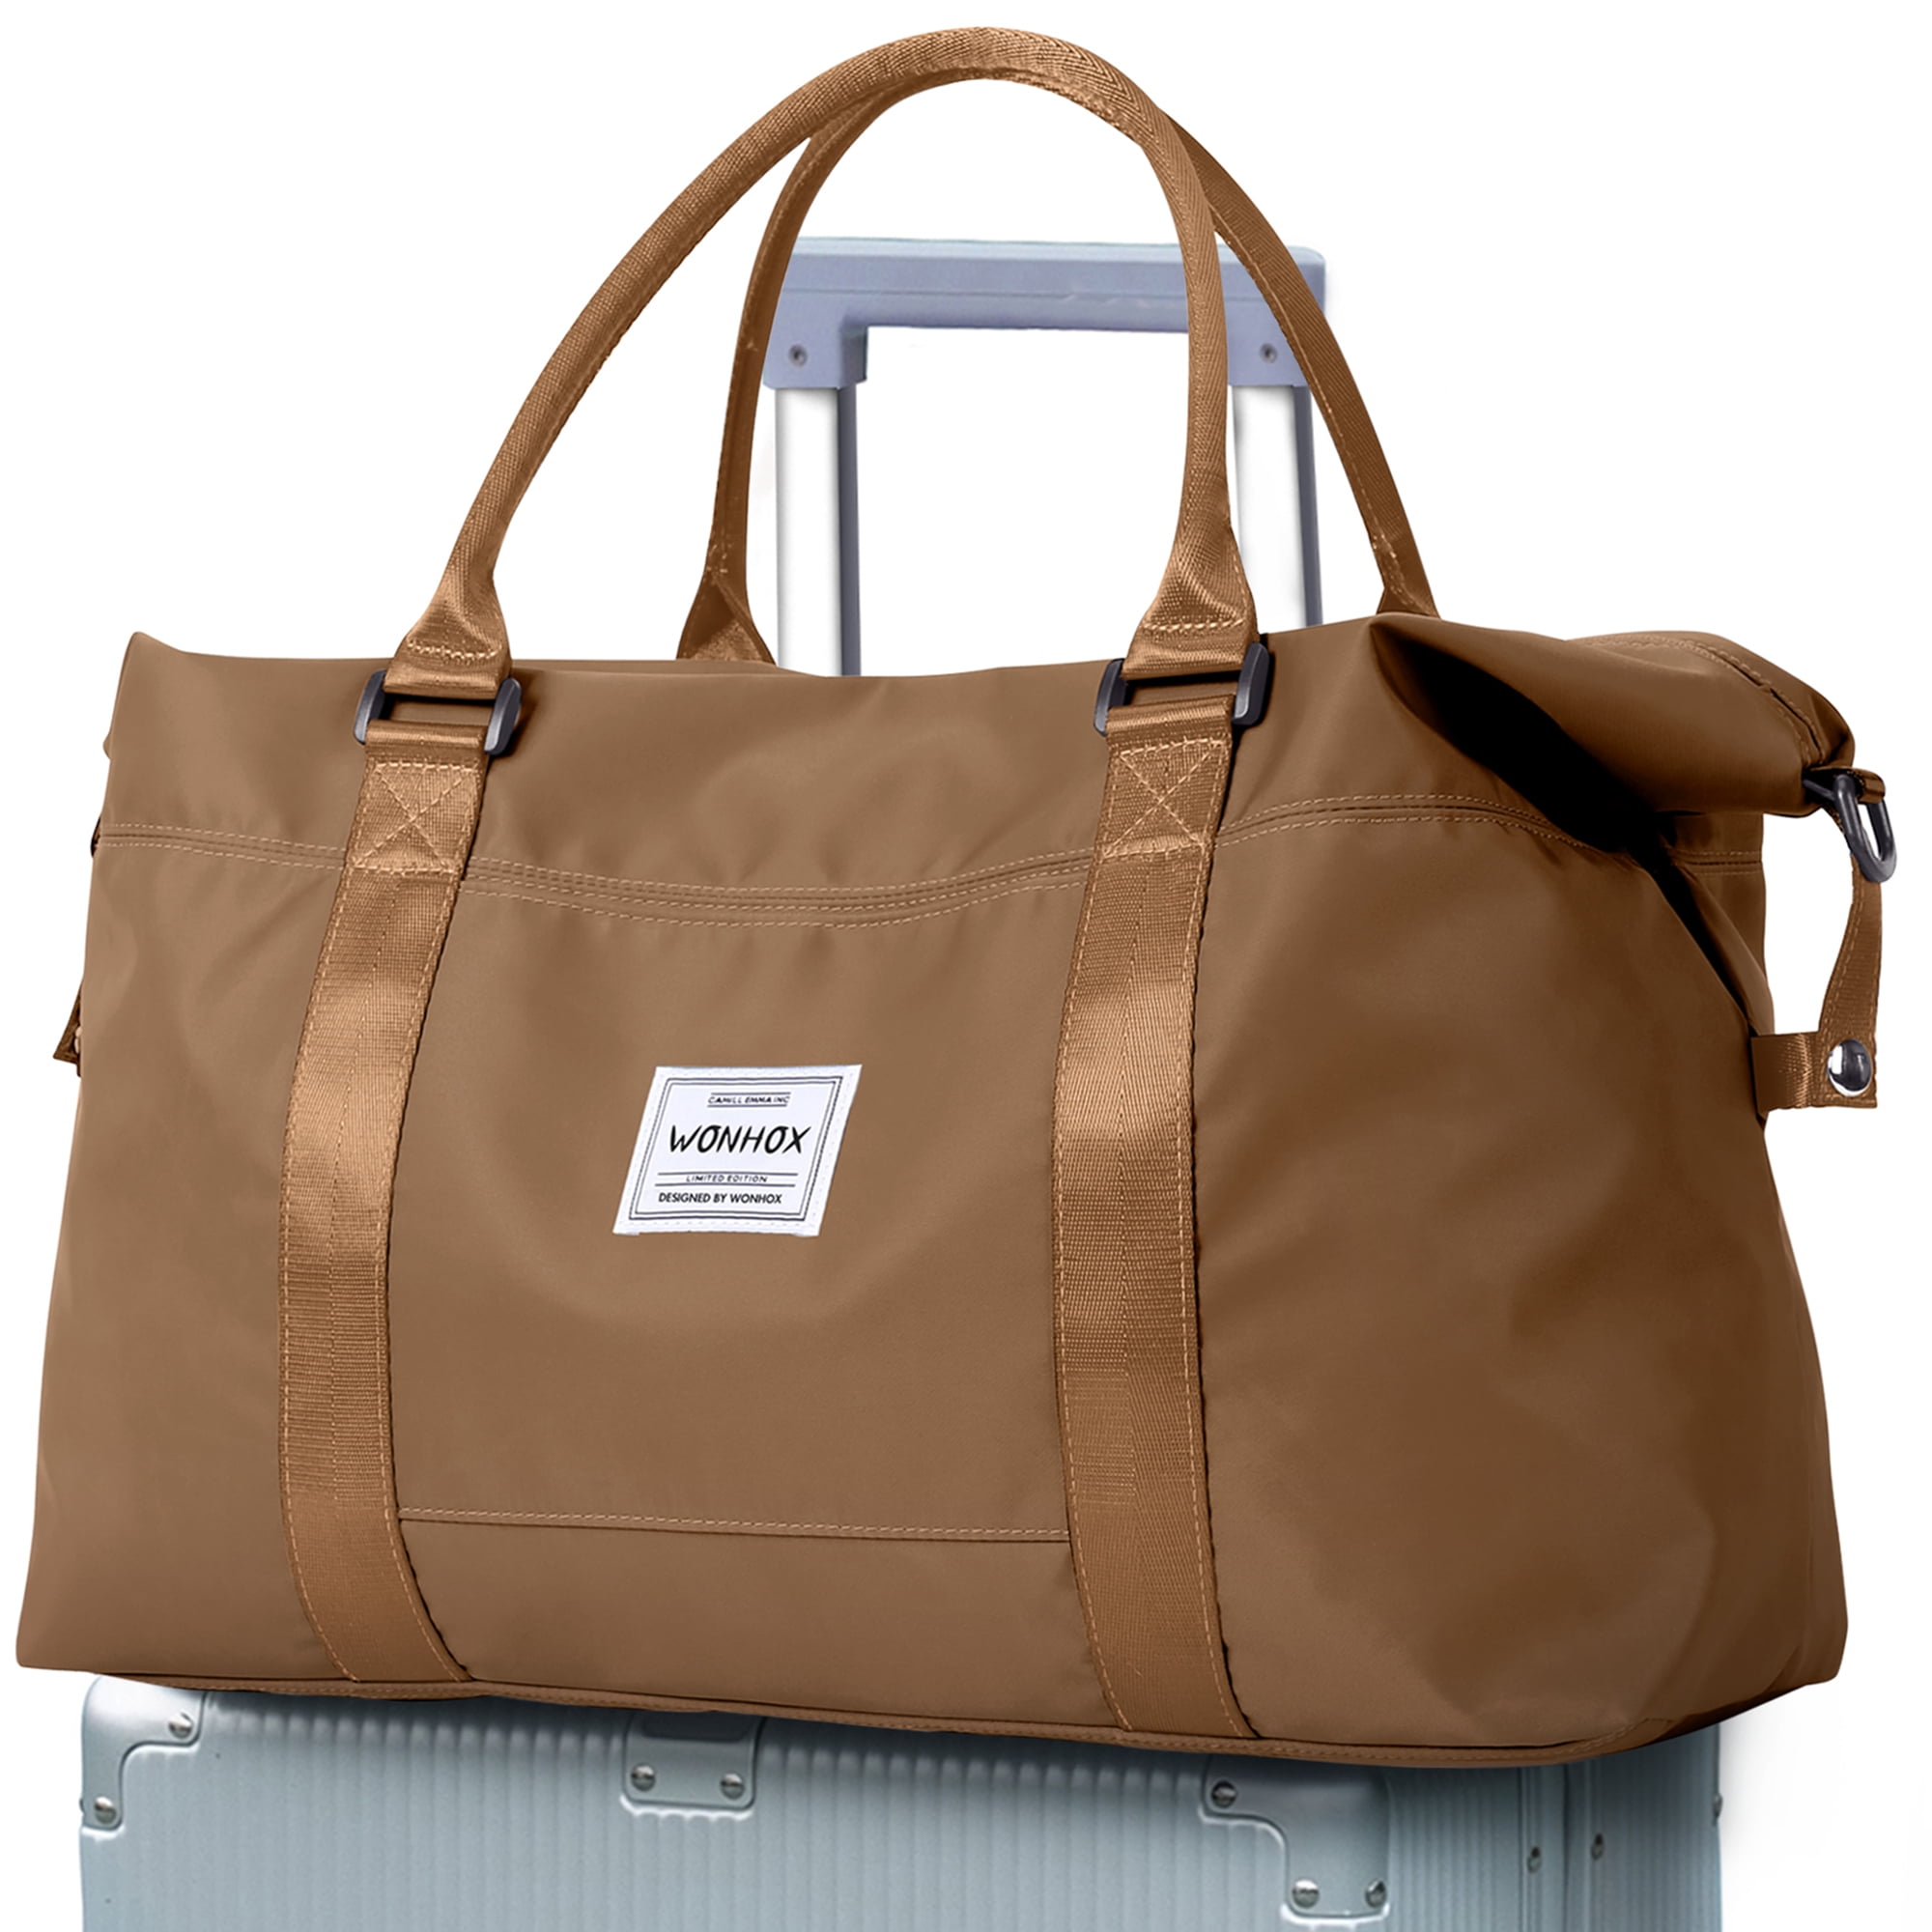 TWENTY FOUR Travel Duffle Bags Sports Tote Gym Bag Shoulder Weekender  Overnight Duffel Bag for Women Mens 